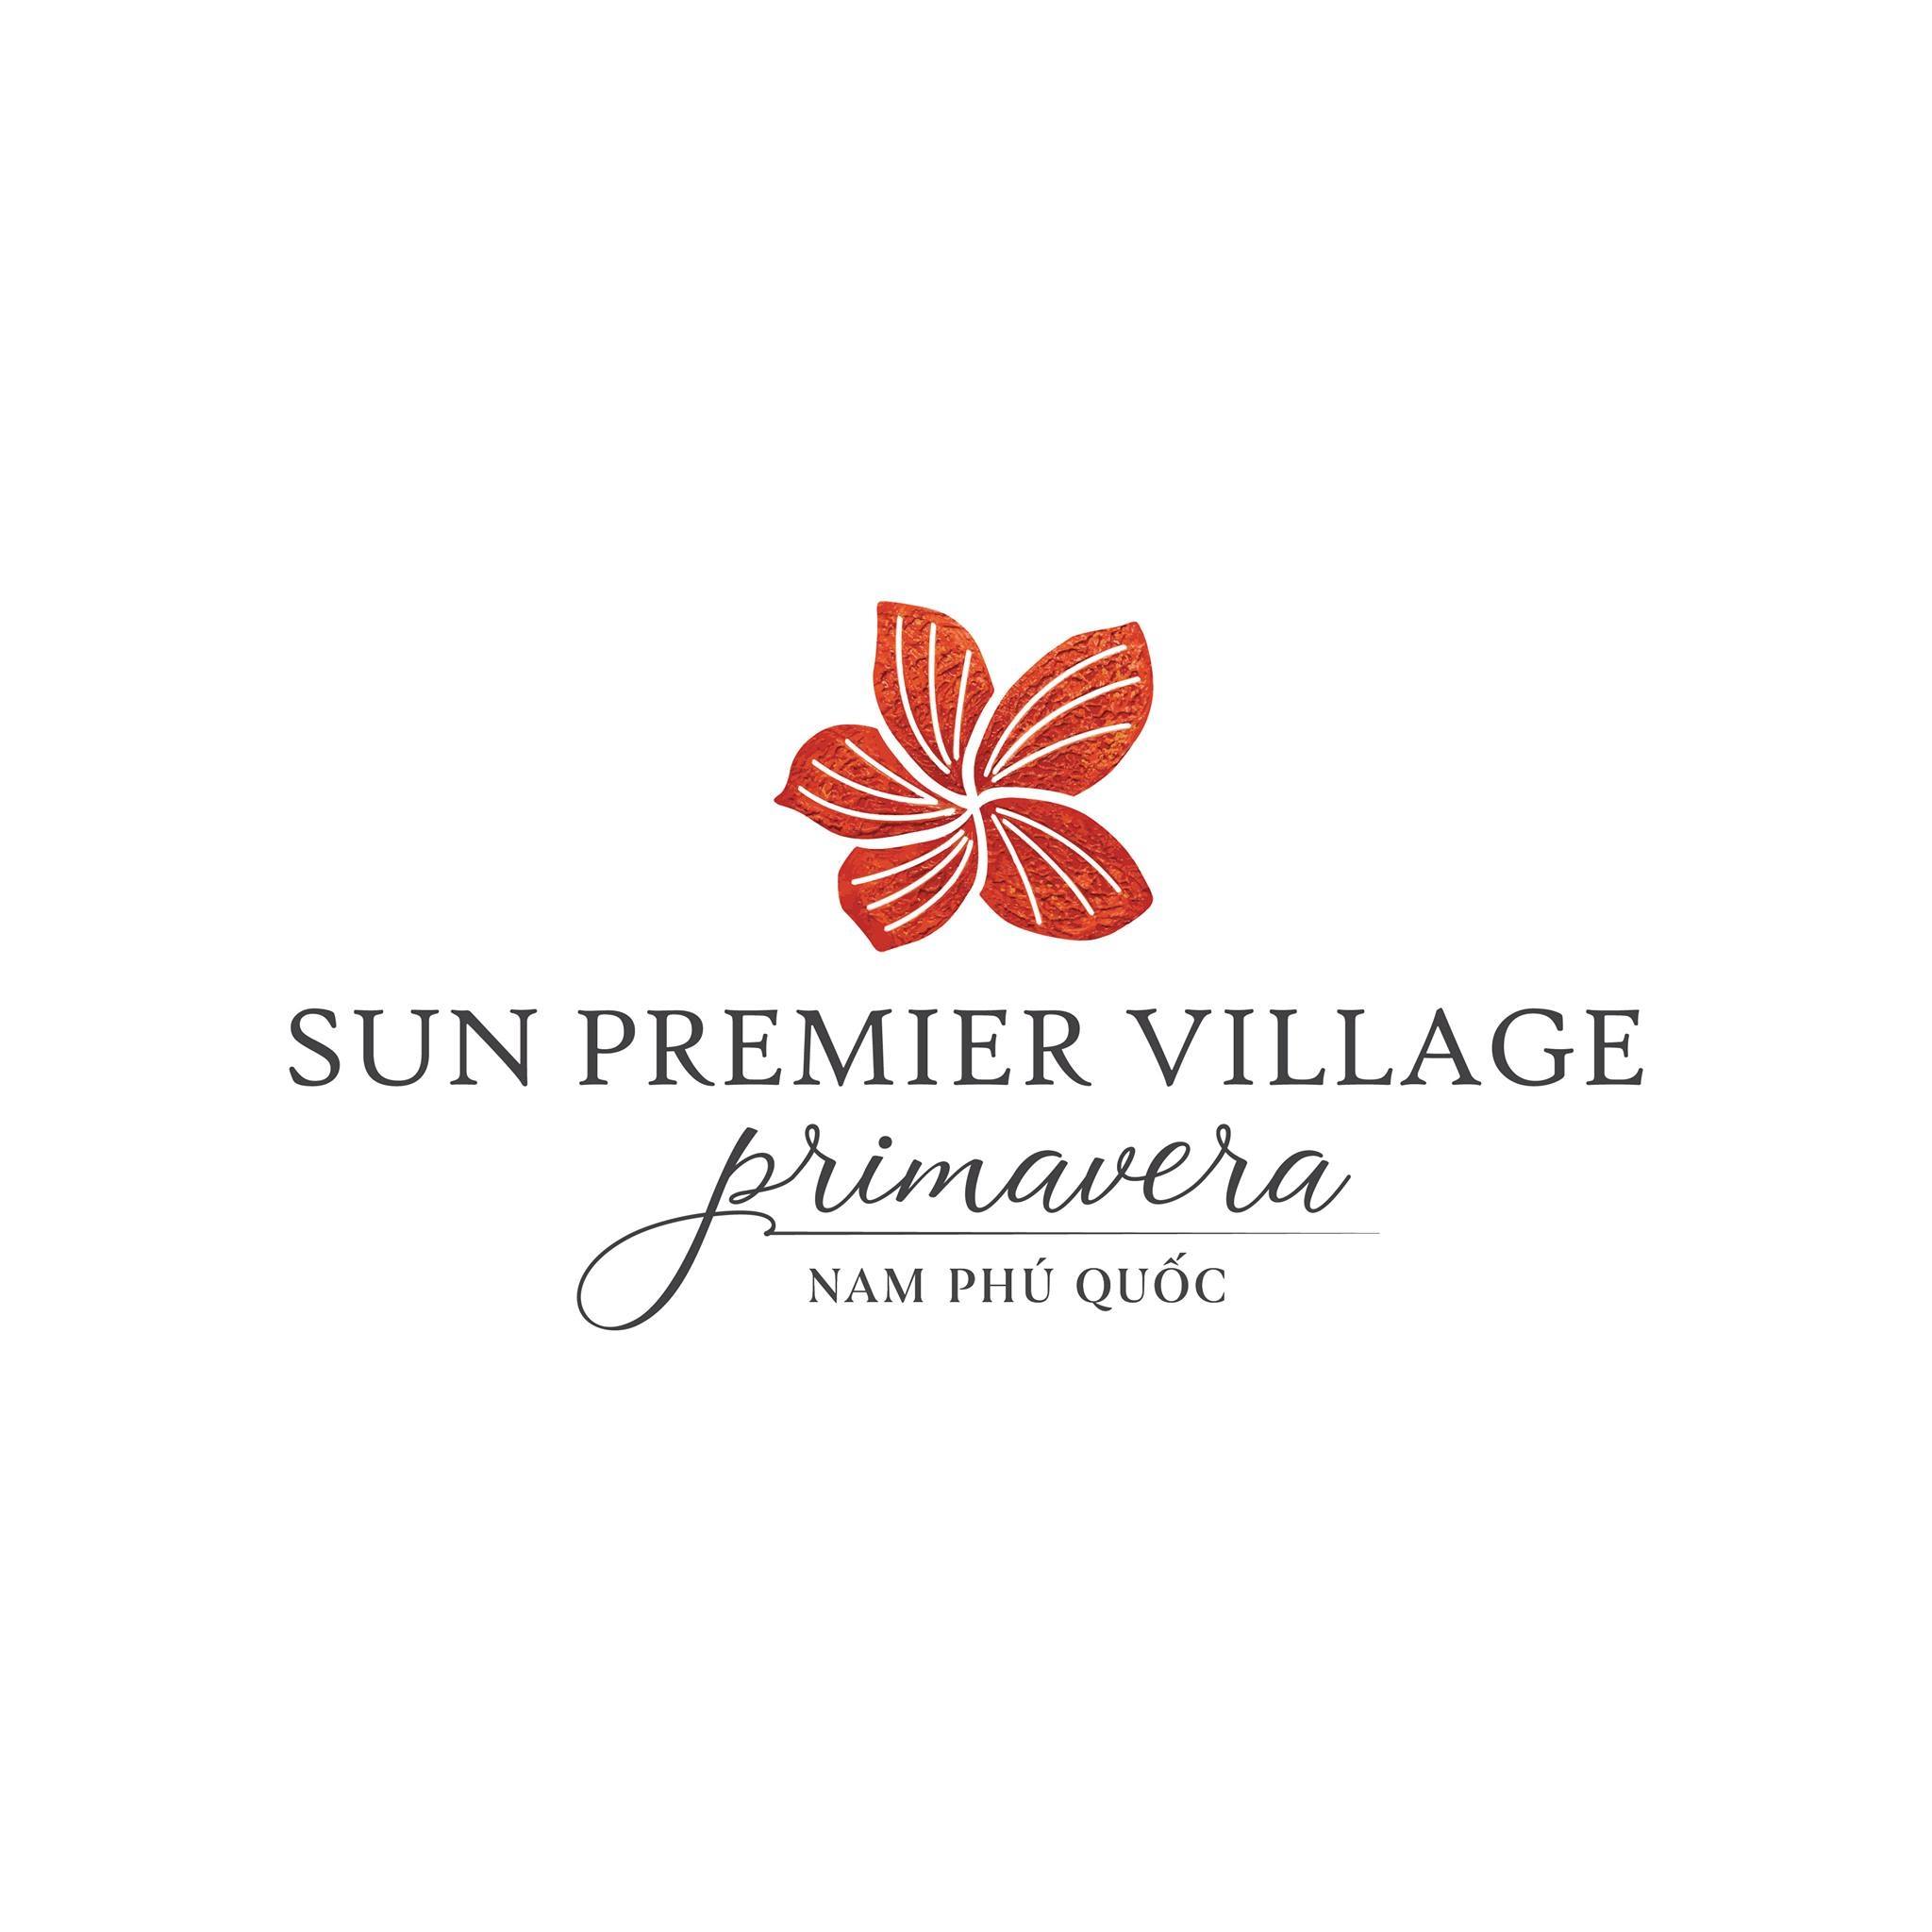 Image result for SUN PREMIER VILLAGE PRIMAVERA